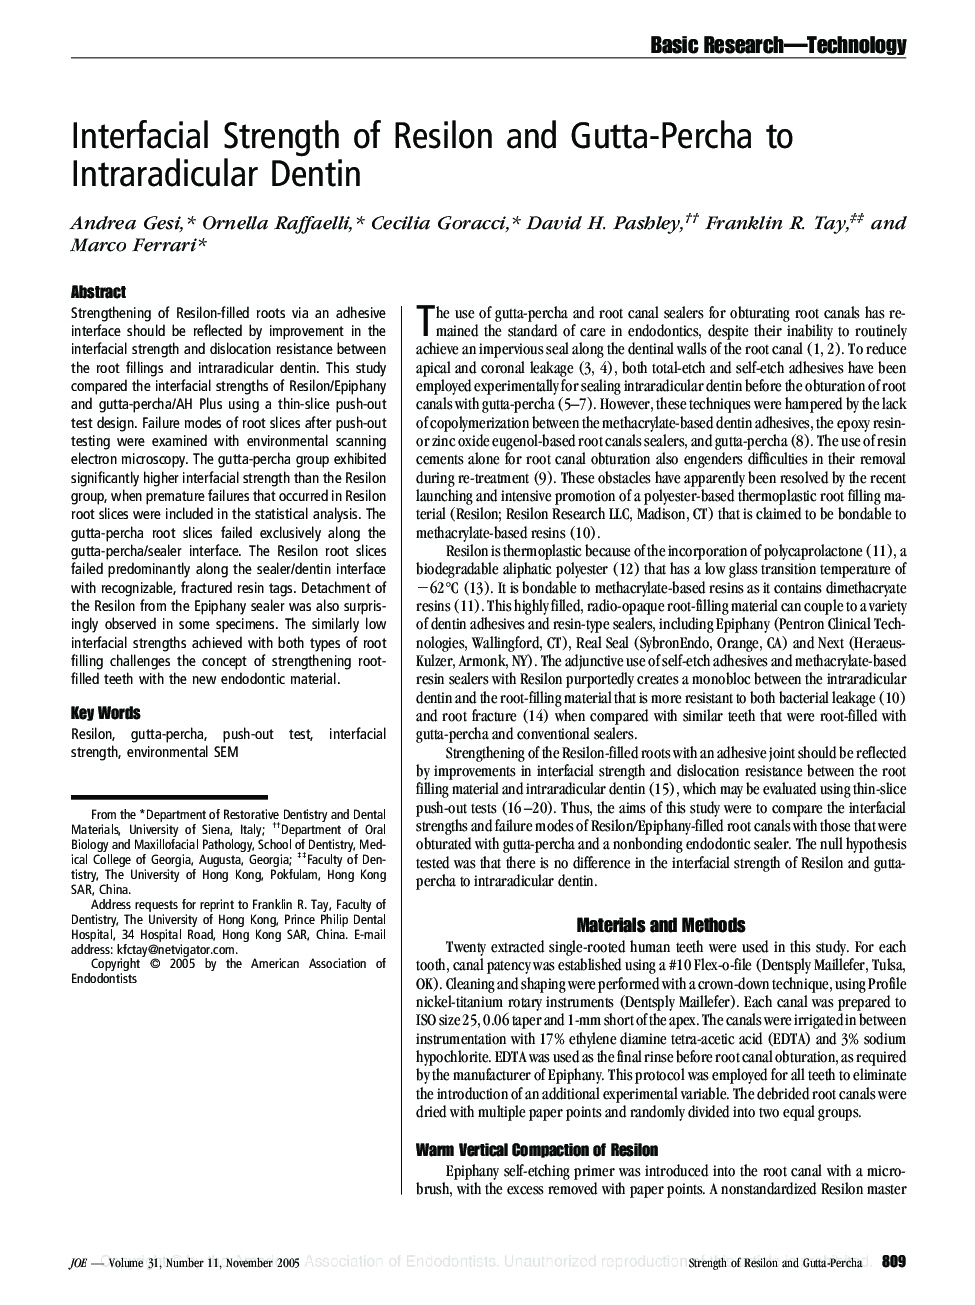 Interfacial Strength of Resilon and Gutta-Percha to Intraradicular Dentin